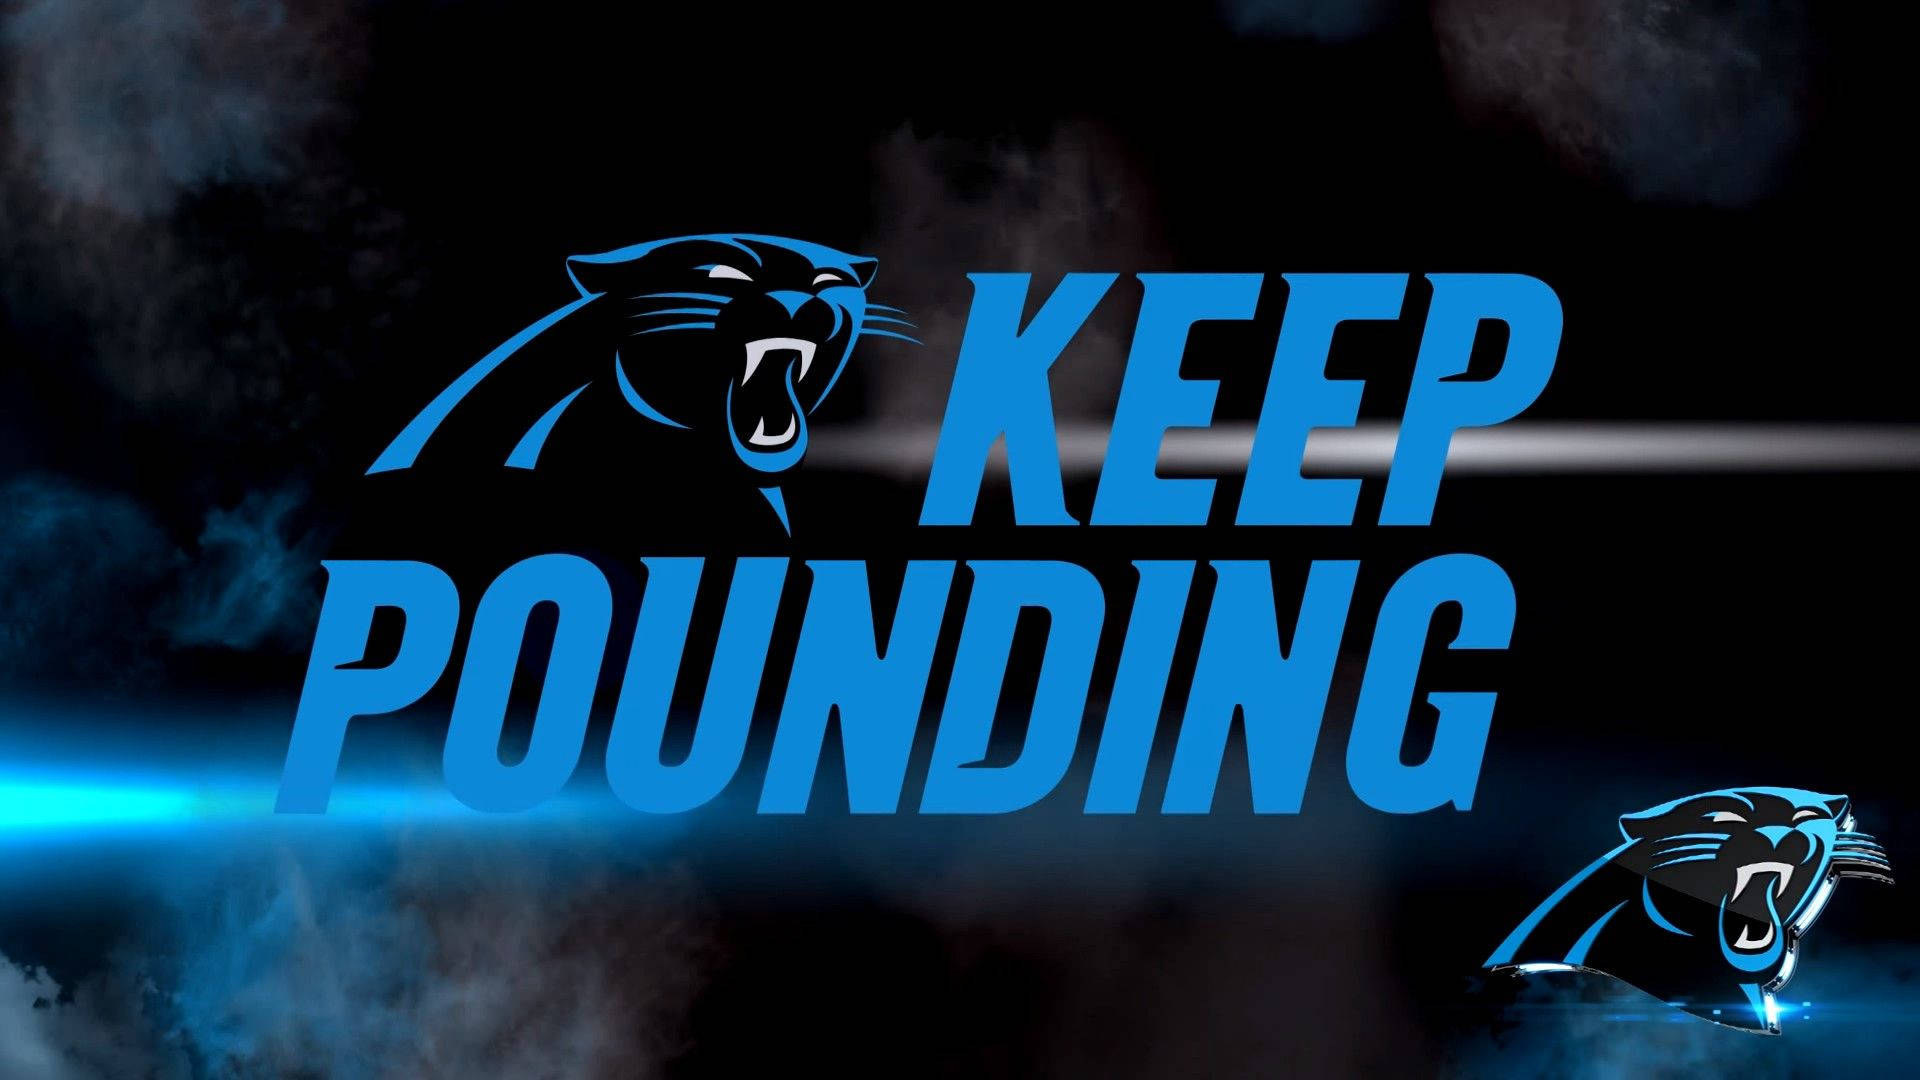 Carolina Panthers Keep Pounding Background